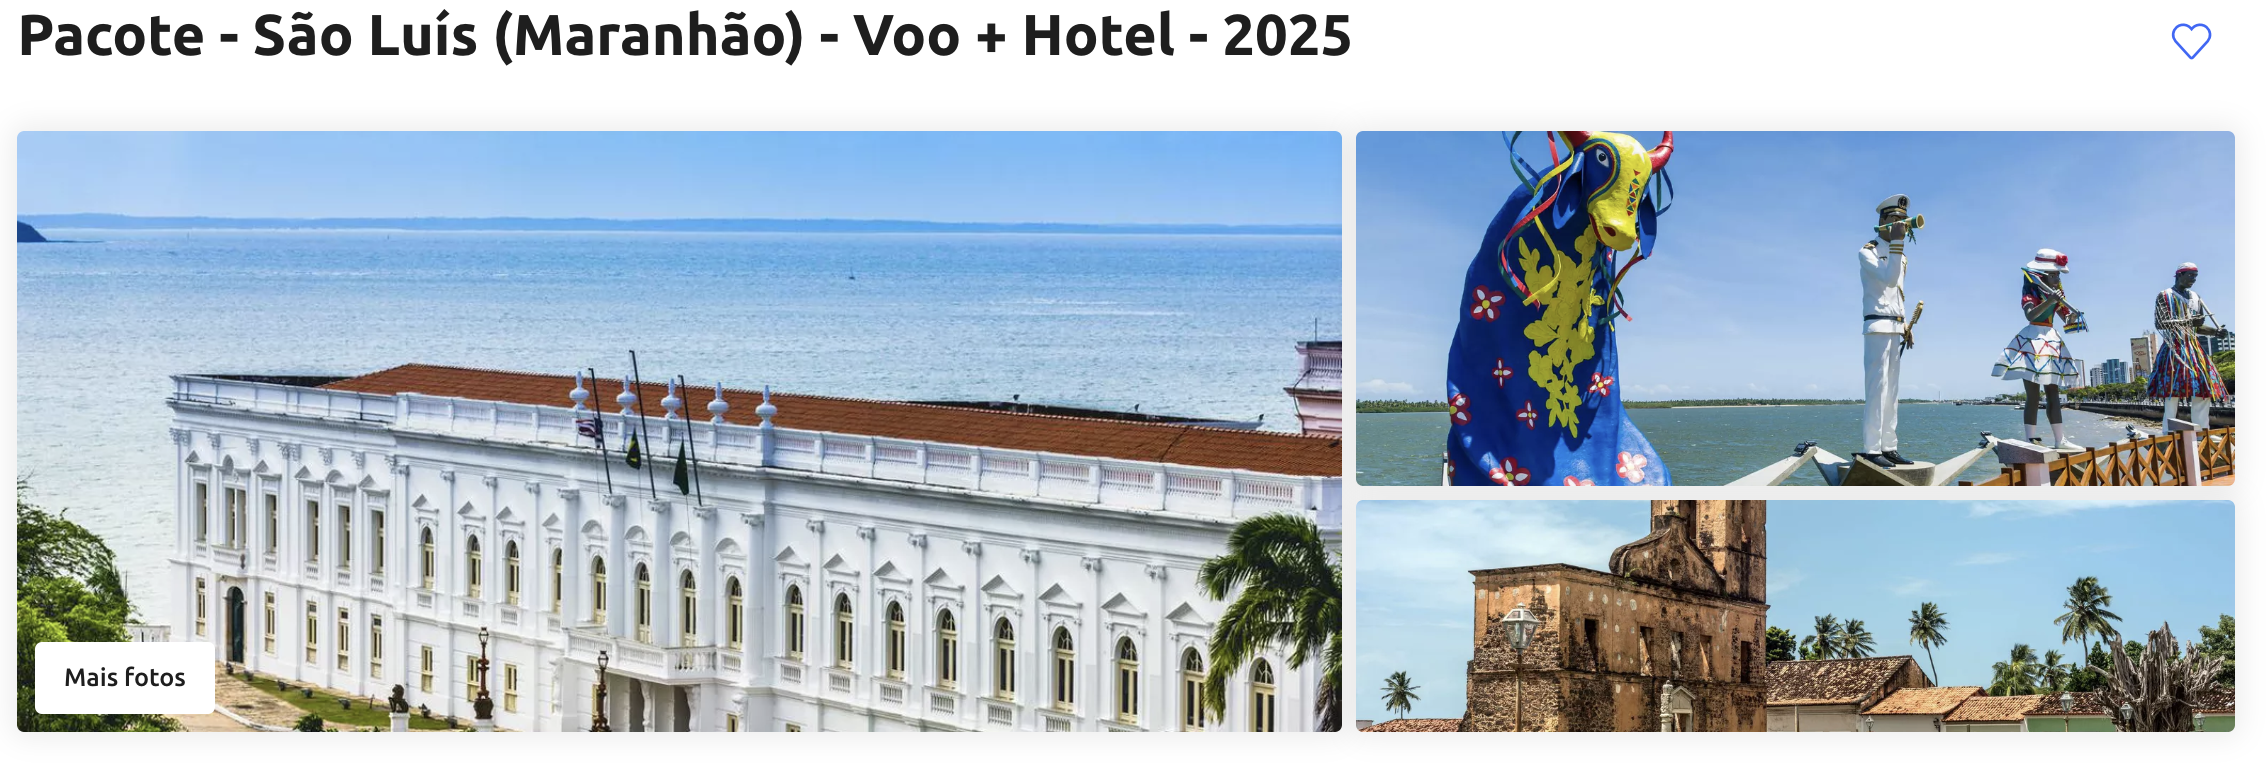 Pacote - São Luís (Maranhão) - Voo + Hotel - 2025